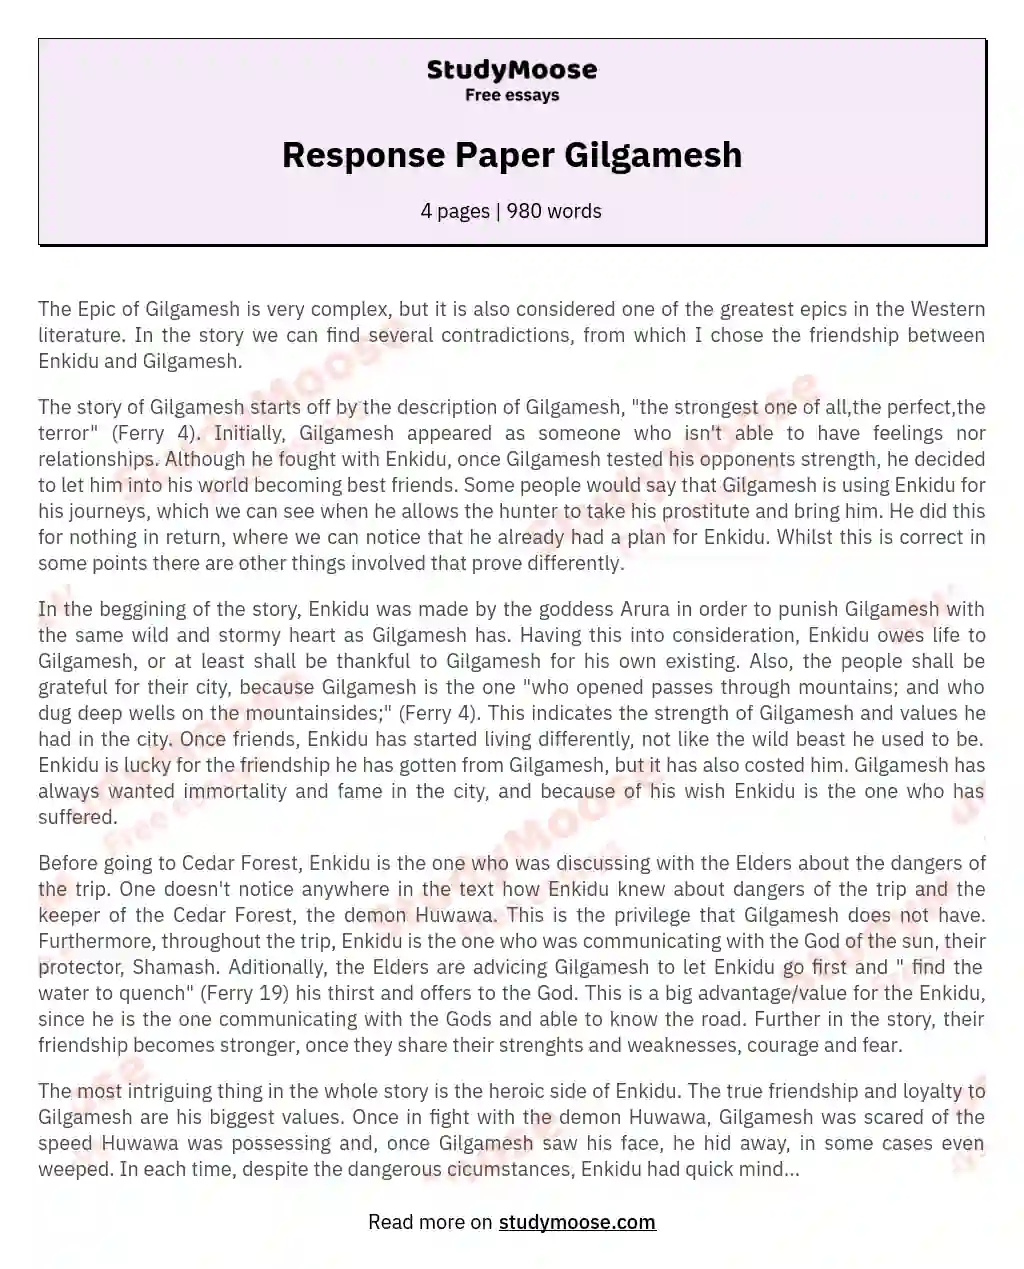 Response Paper Gilgamesh essay